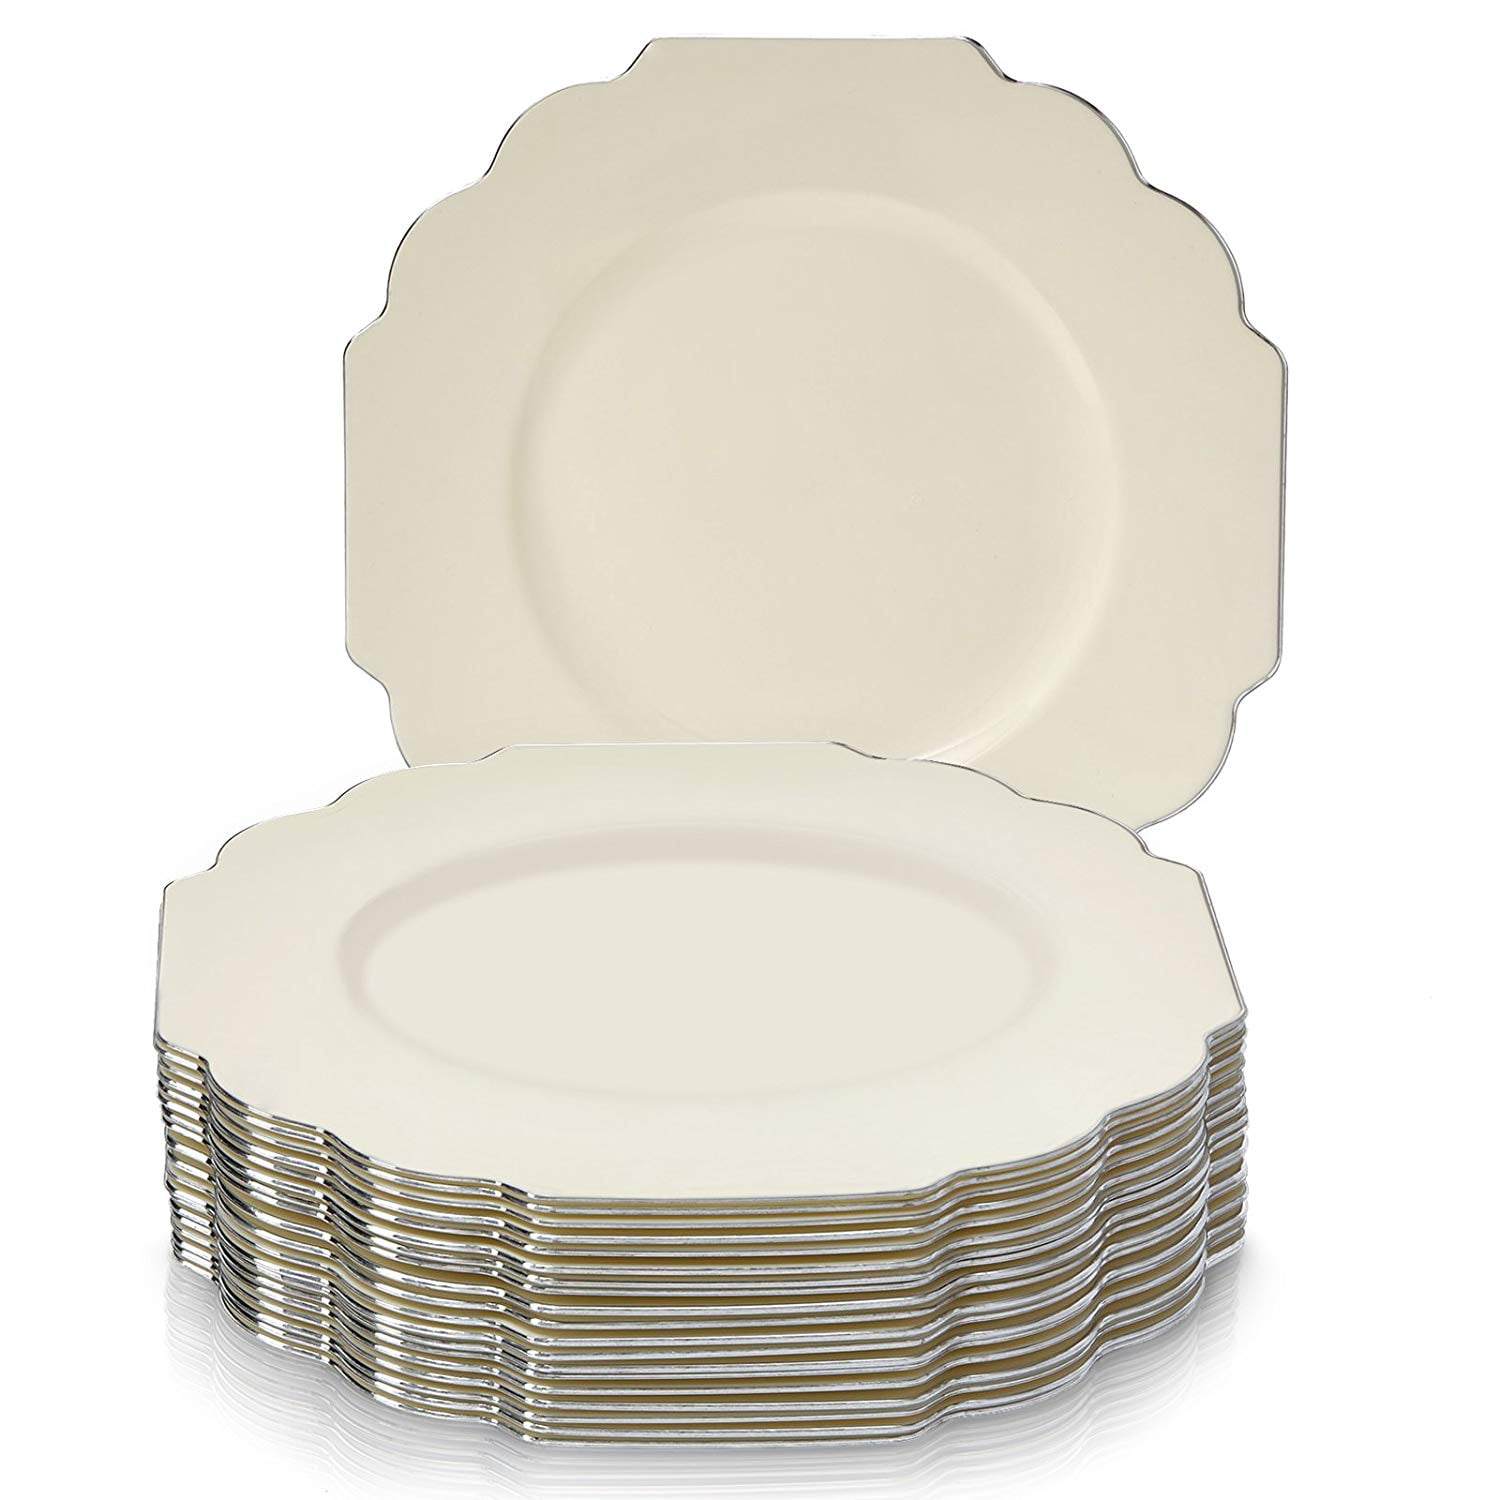 Disposable Plastic Plates Set 20 Dinner Plates for